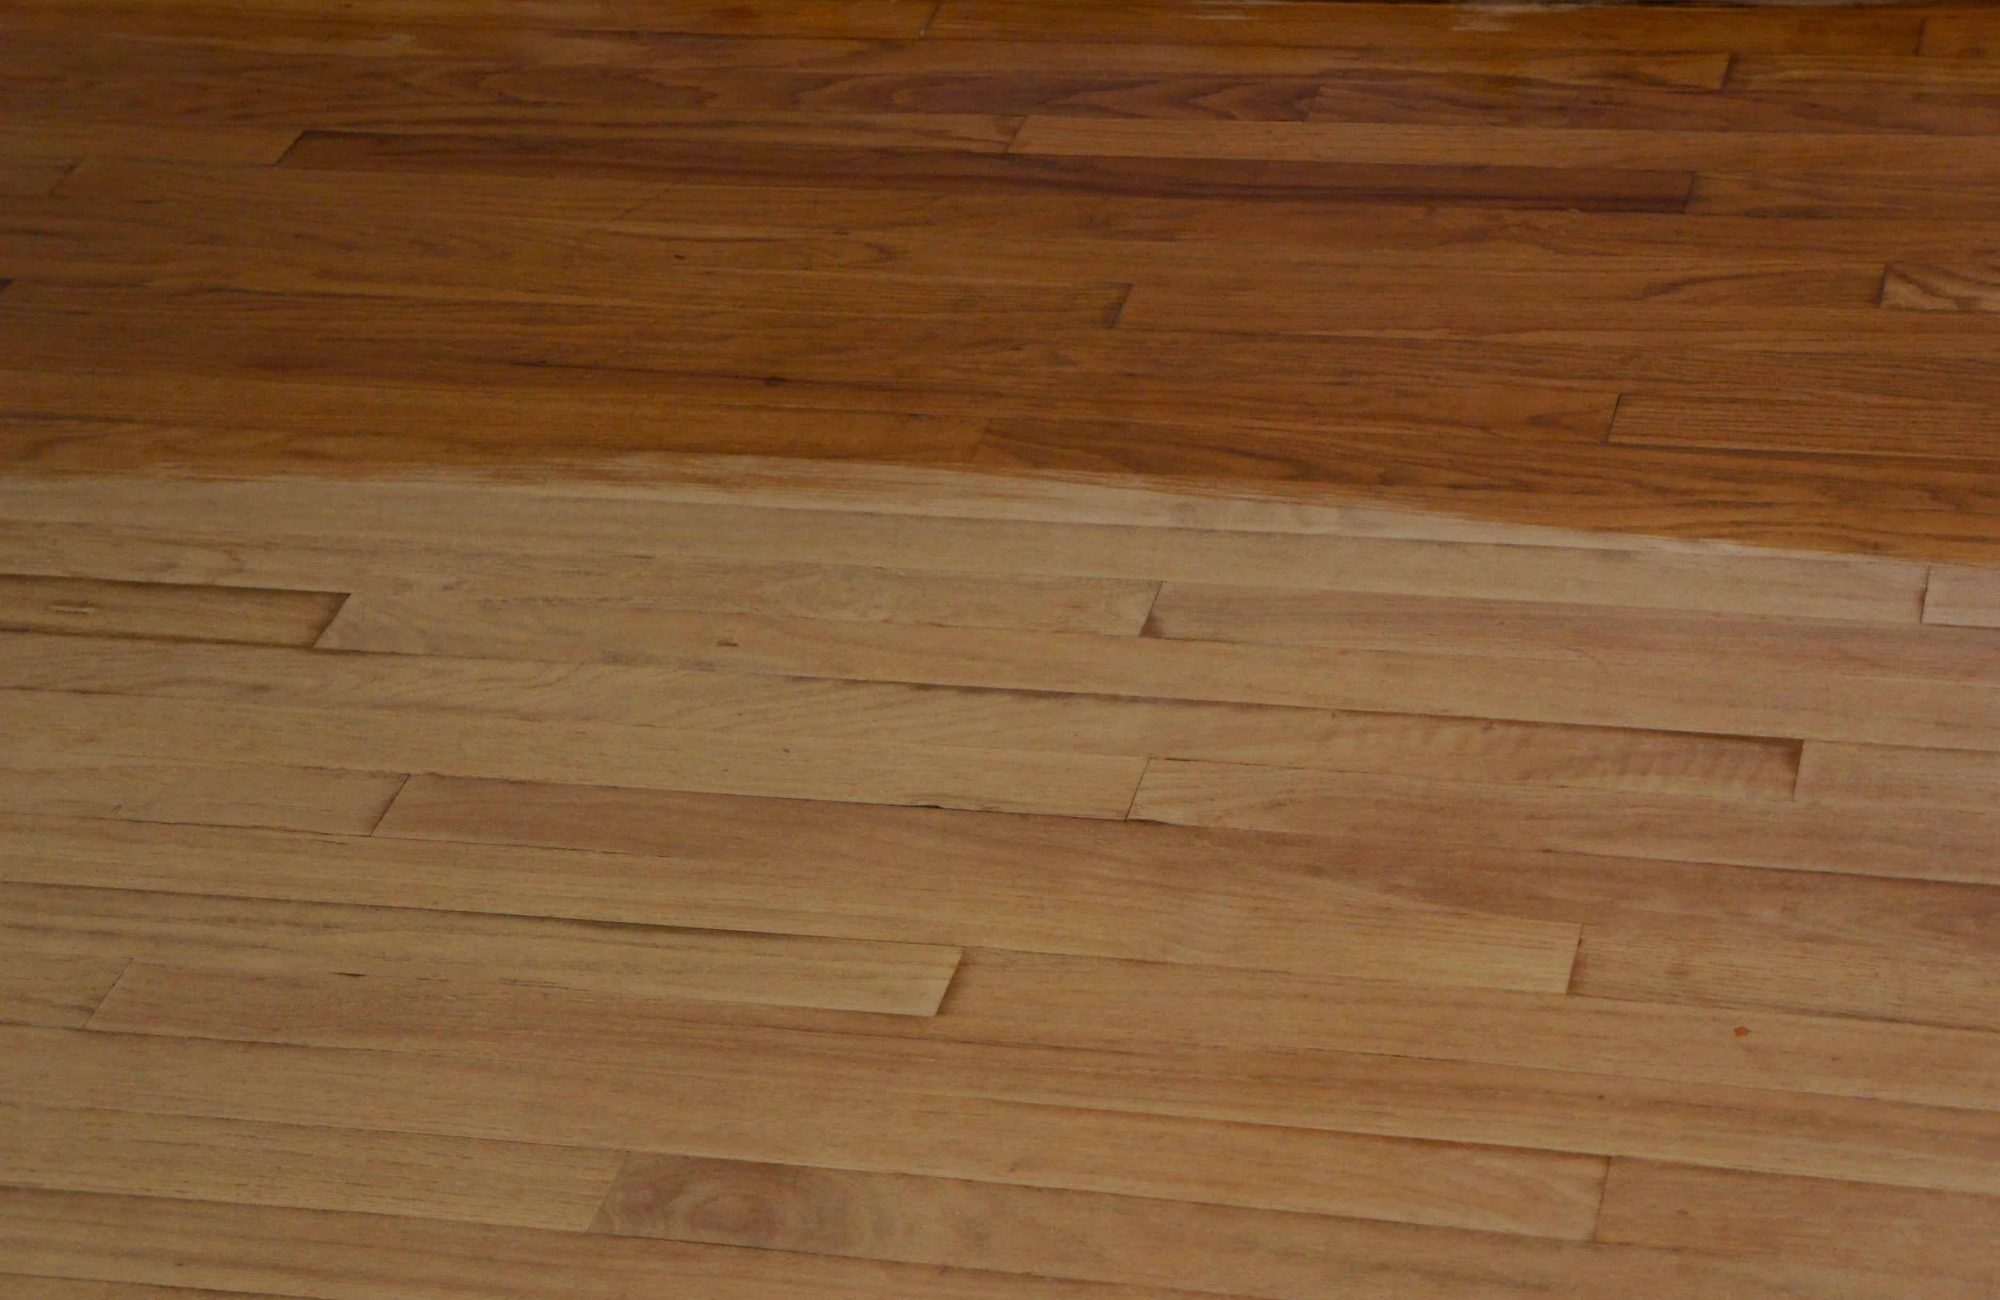 Sanded Hardwood Floor with Polyurethane on Half of it.